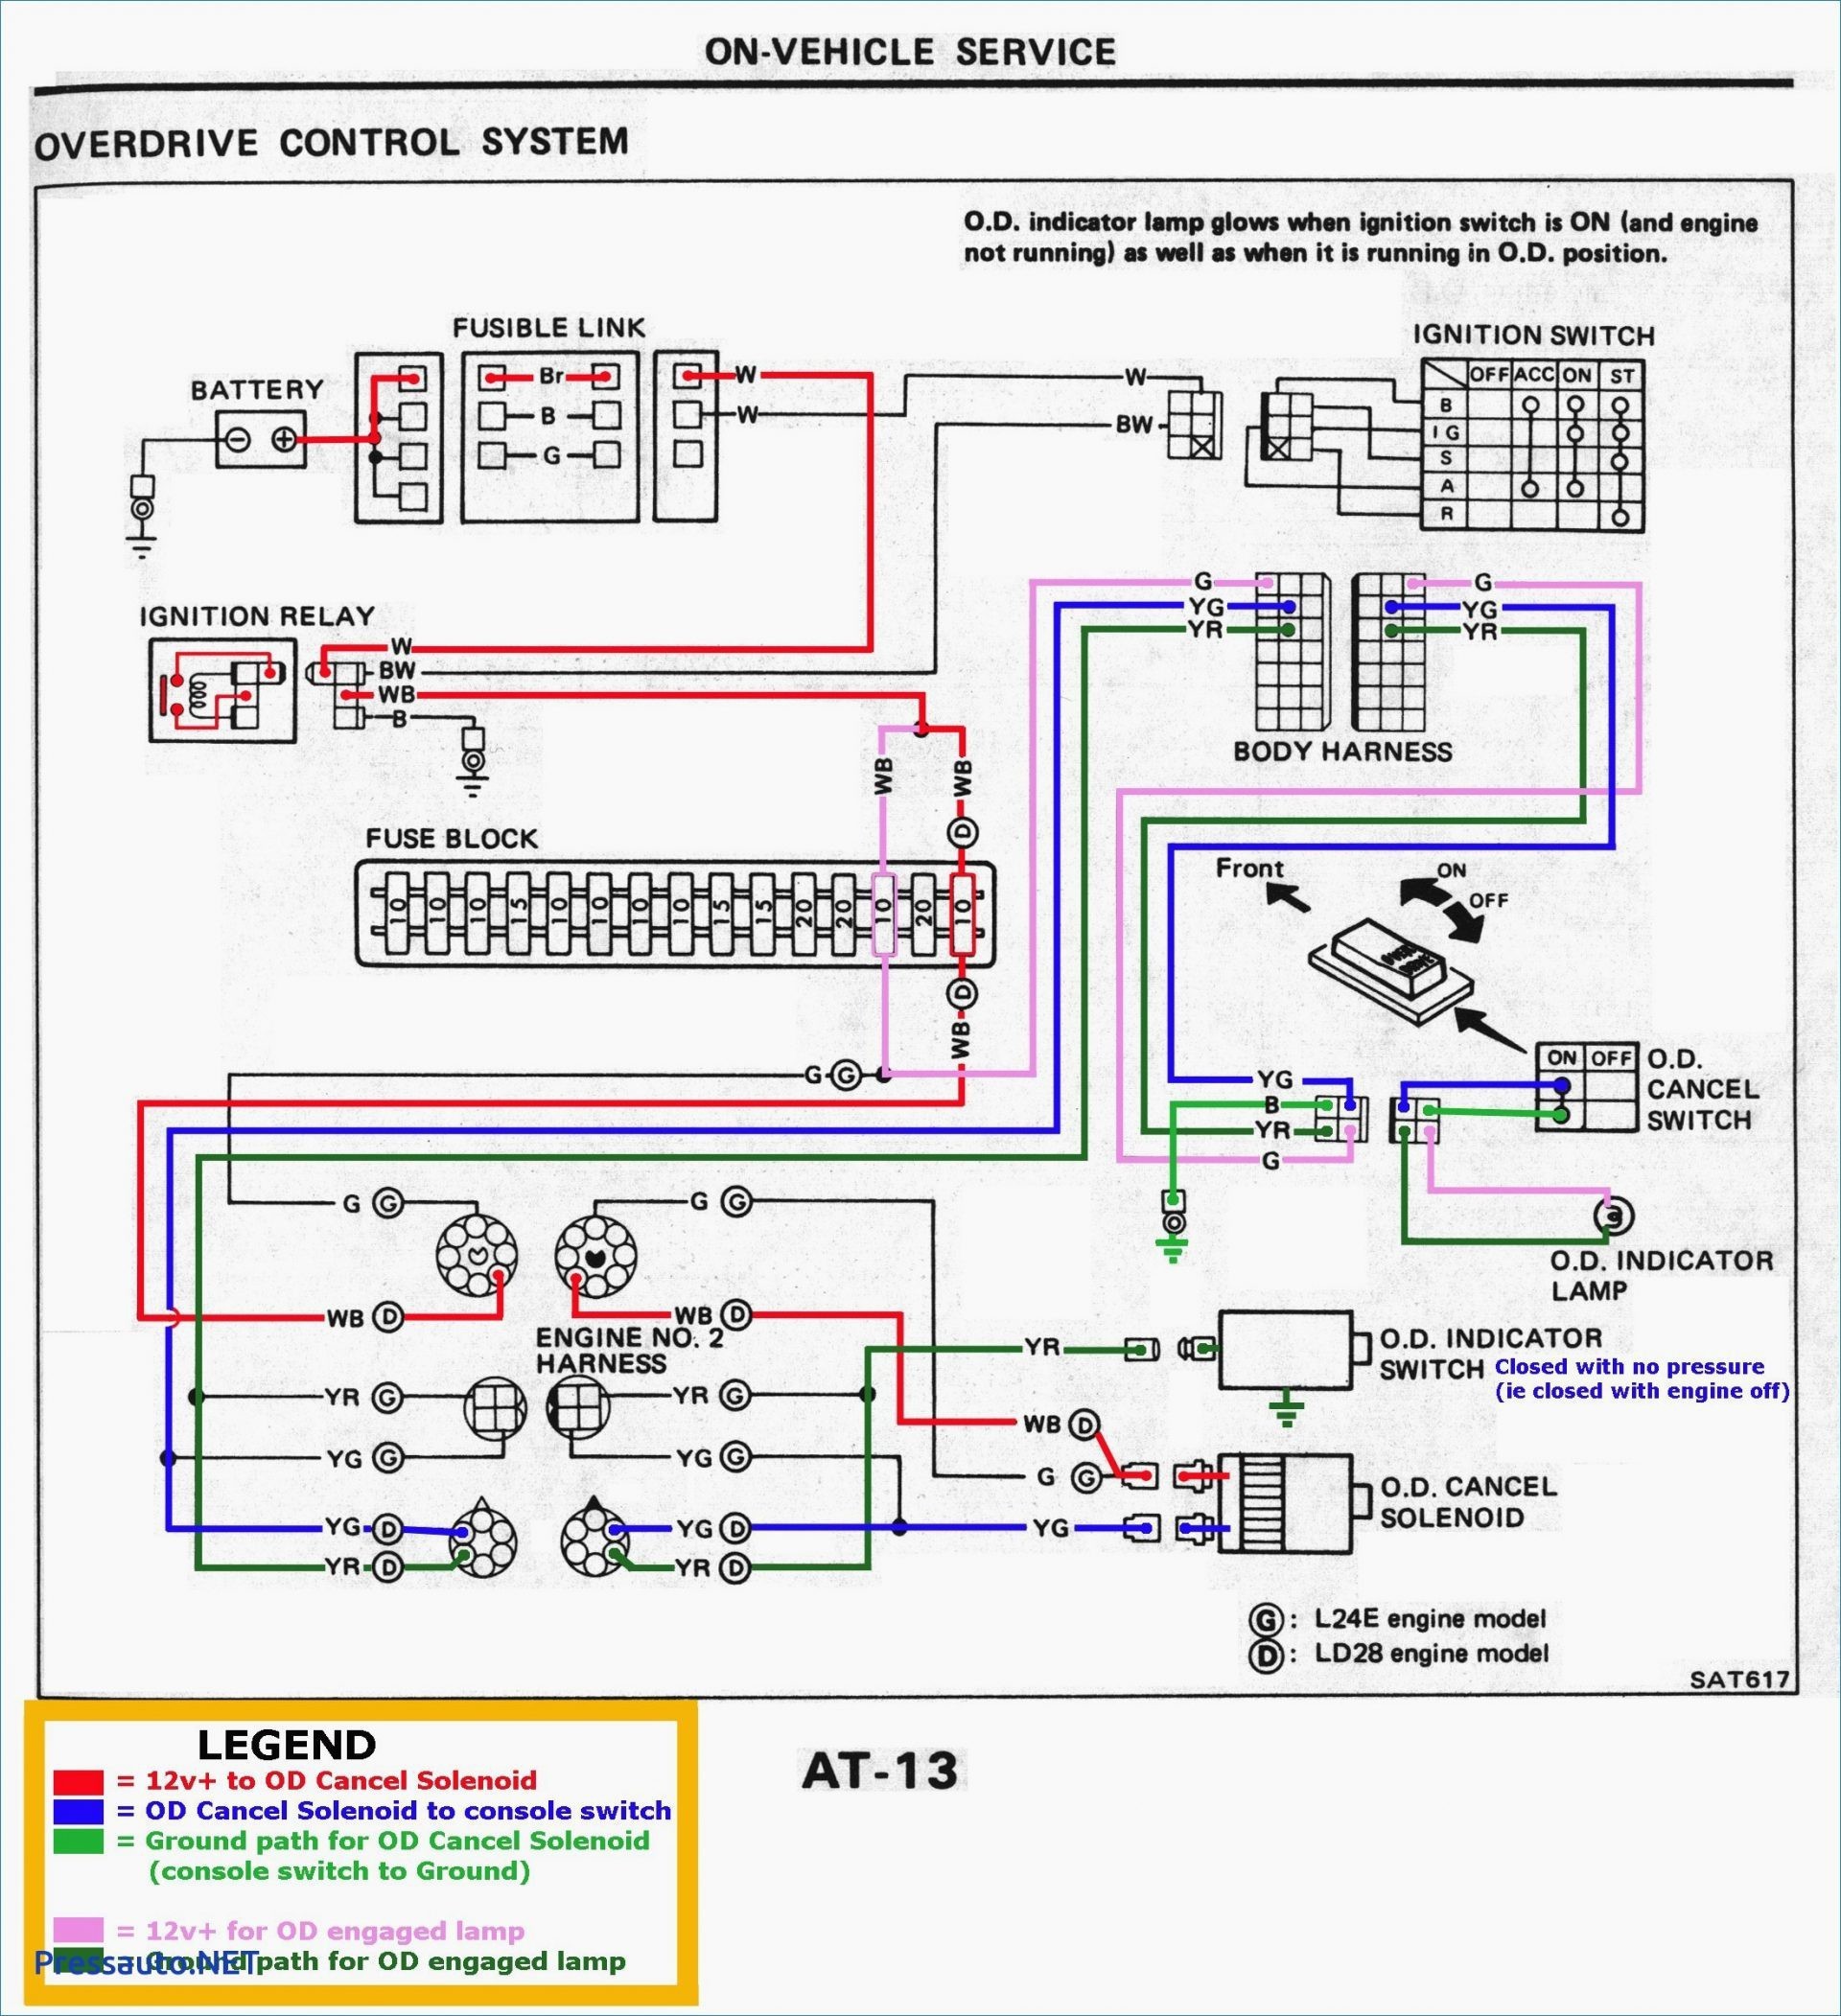 2005 Mustang Engine Diagram 87 Mustang Rear Light Wiring Diagram Mastering Wiring Diagram • Of 2005 Mustang Engine Diagram